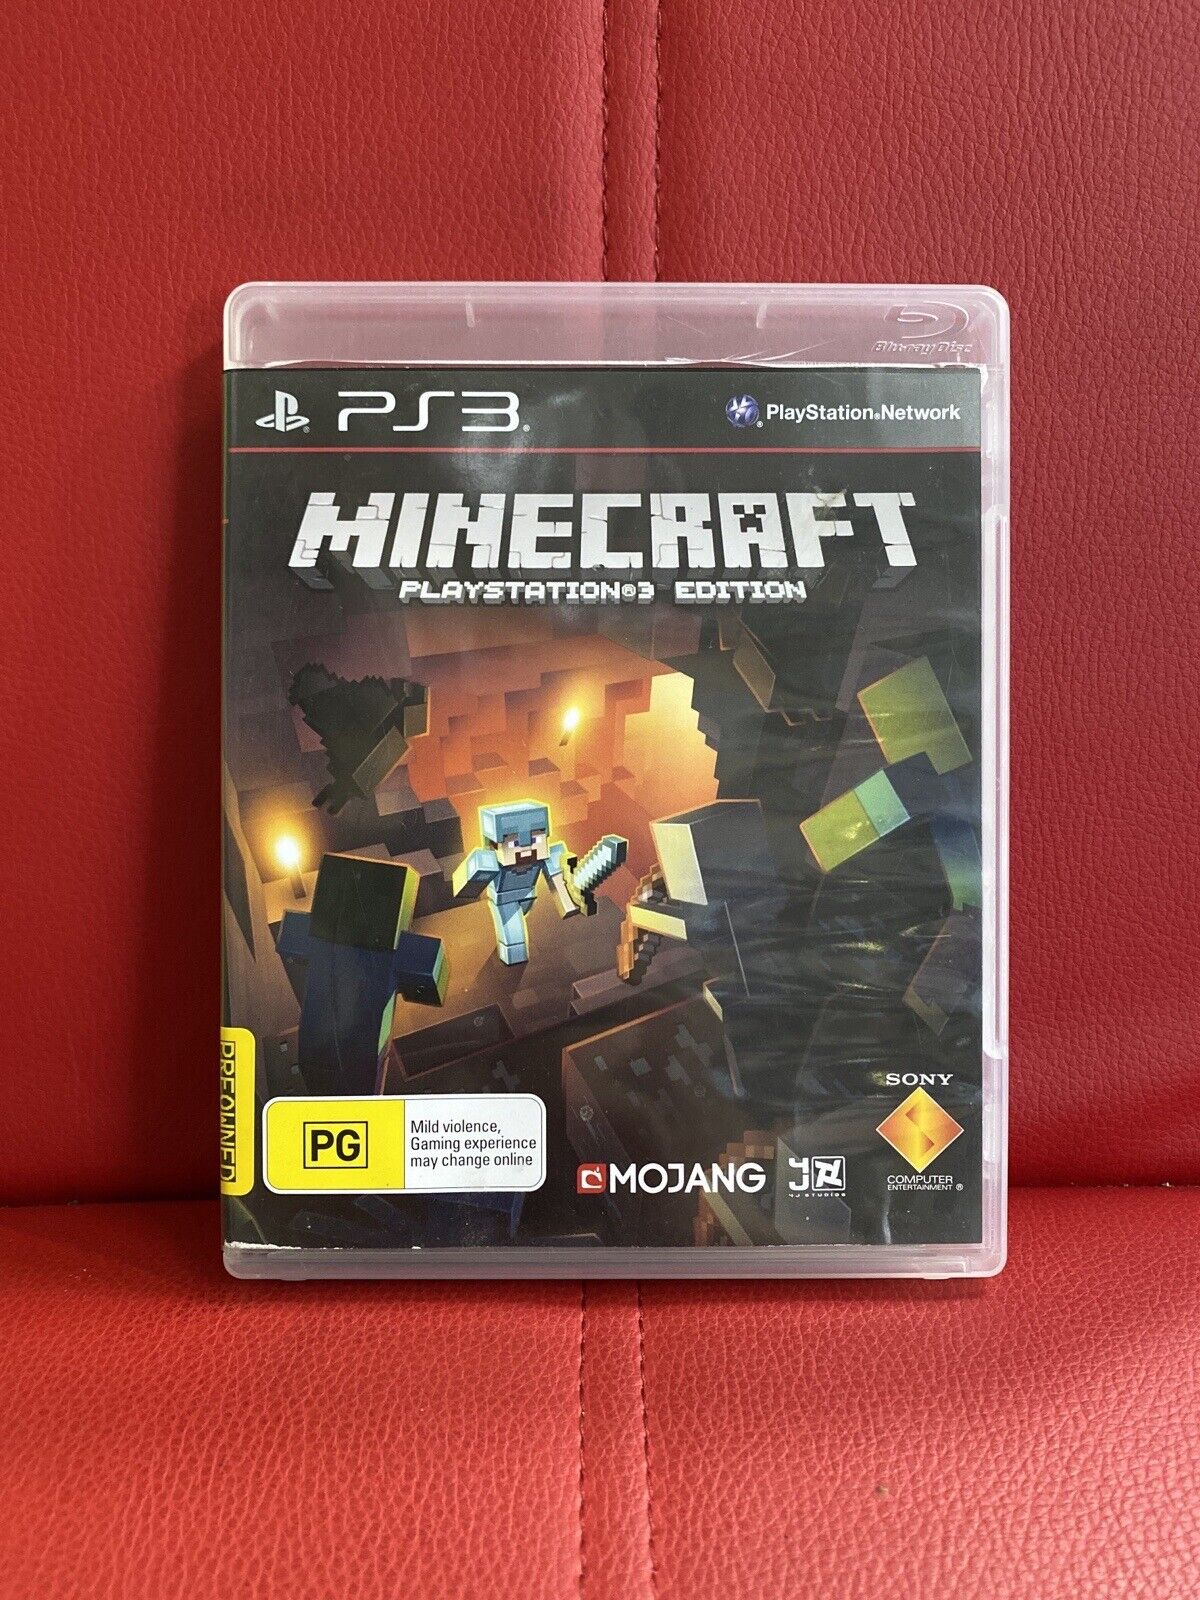 Minecraft PS3 3 | eBay